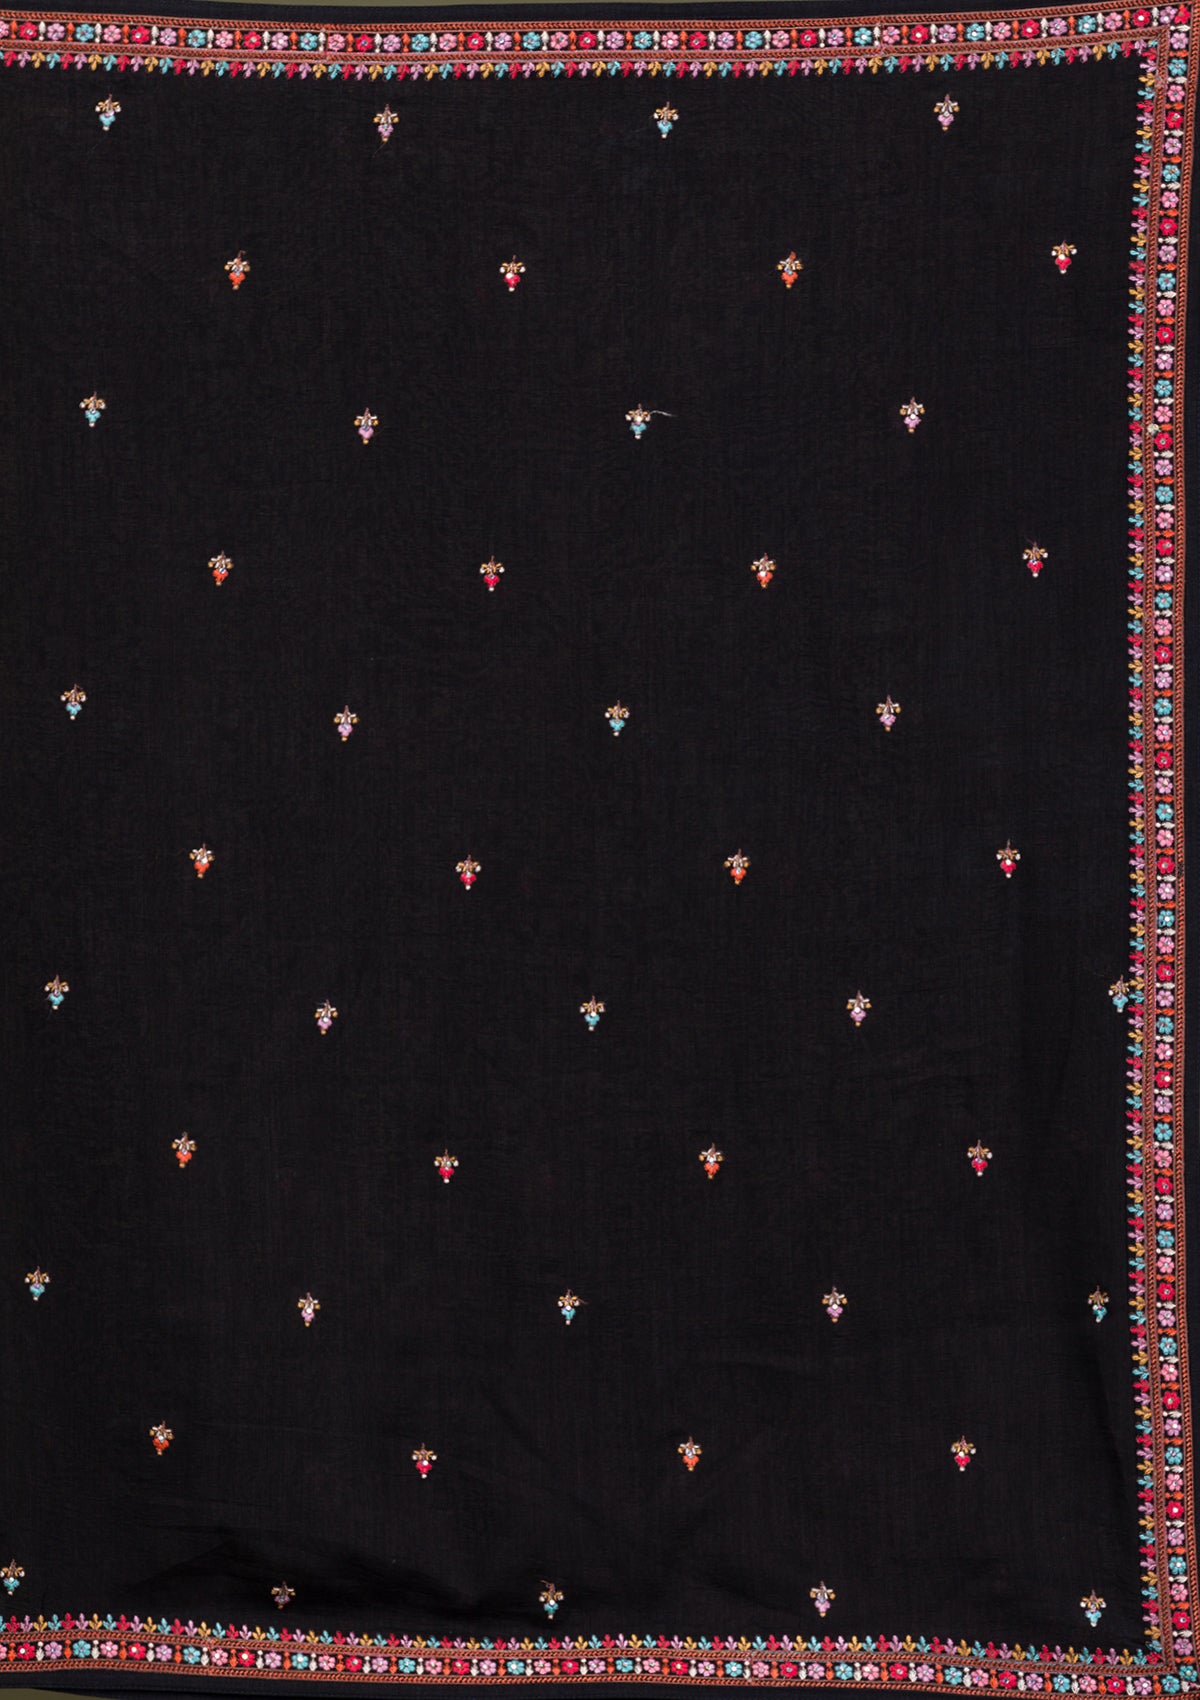 Black Threadwork Georgette Readymade Salwar Suit